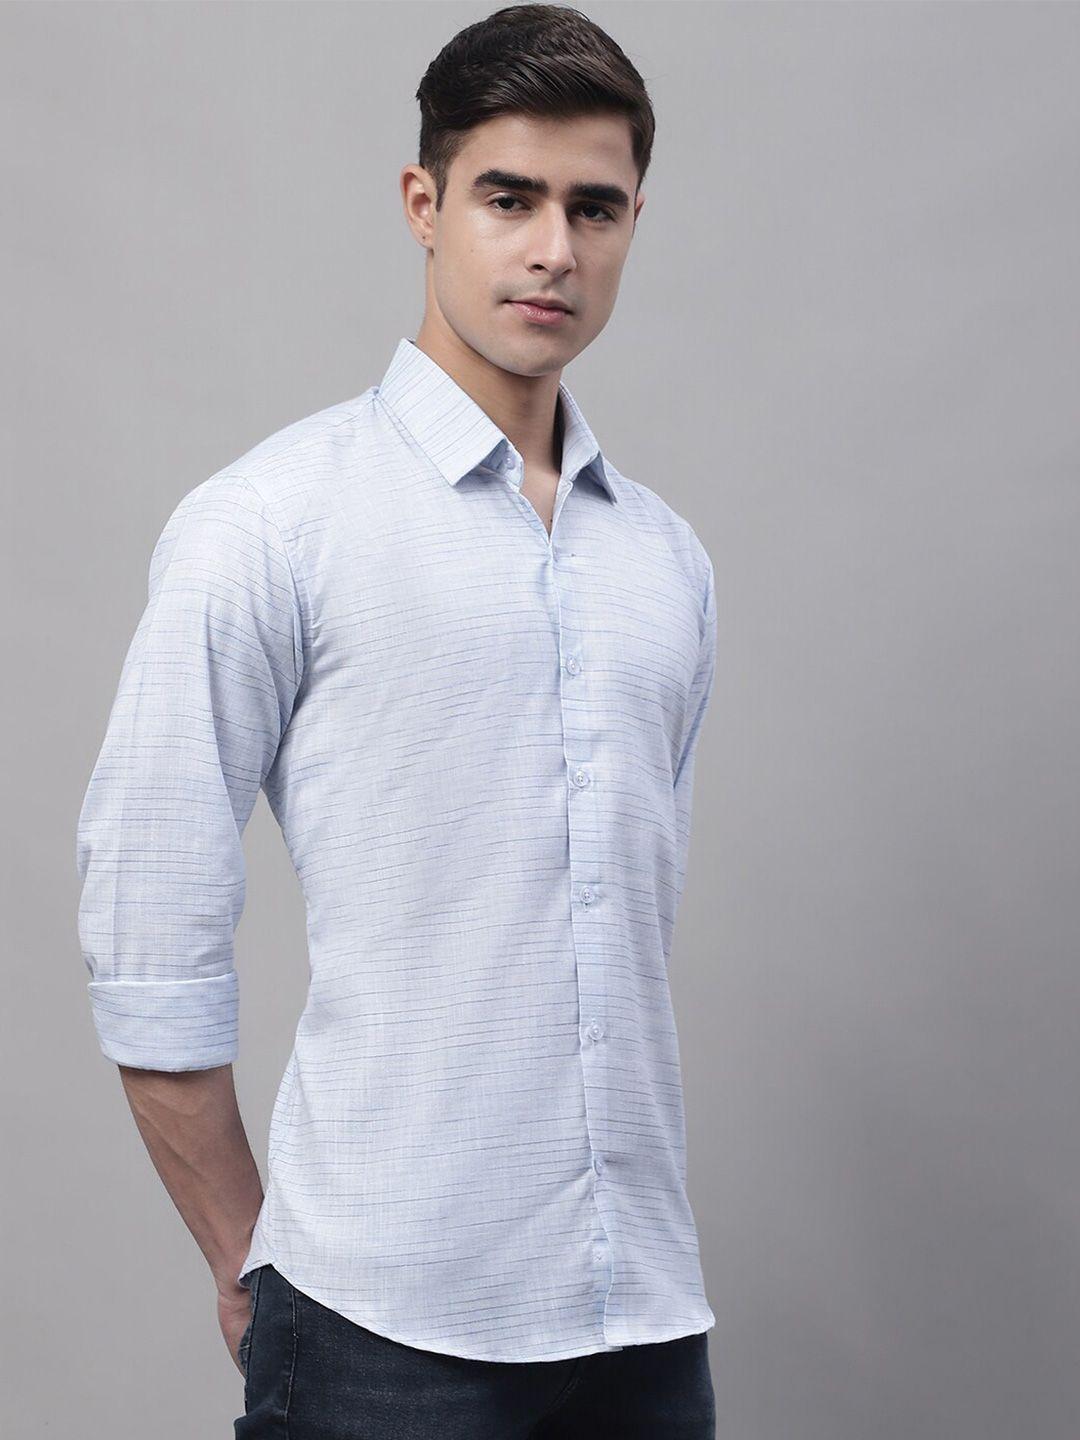 jainish men classic horizontal striped casual cotton shirt